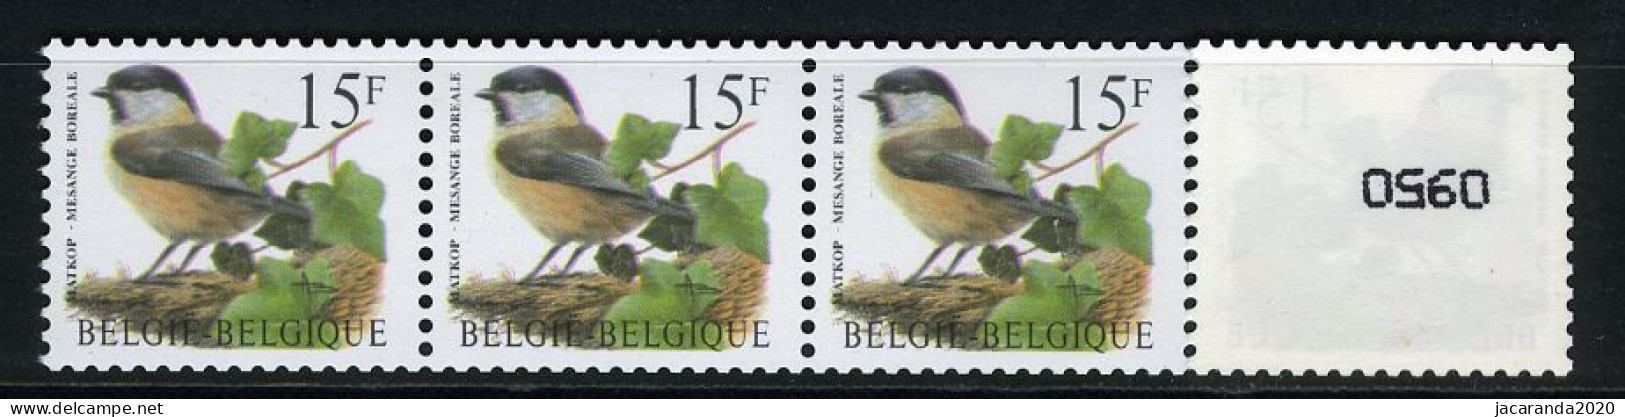 België R83a - Vogels - Oiseaux - Buzin (2732) - 15F - Matkop - Strook Met 4 Cijfers - Kopstaand - Bande Avec 4 Chiffres - Rollen